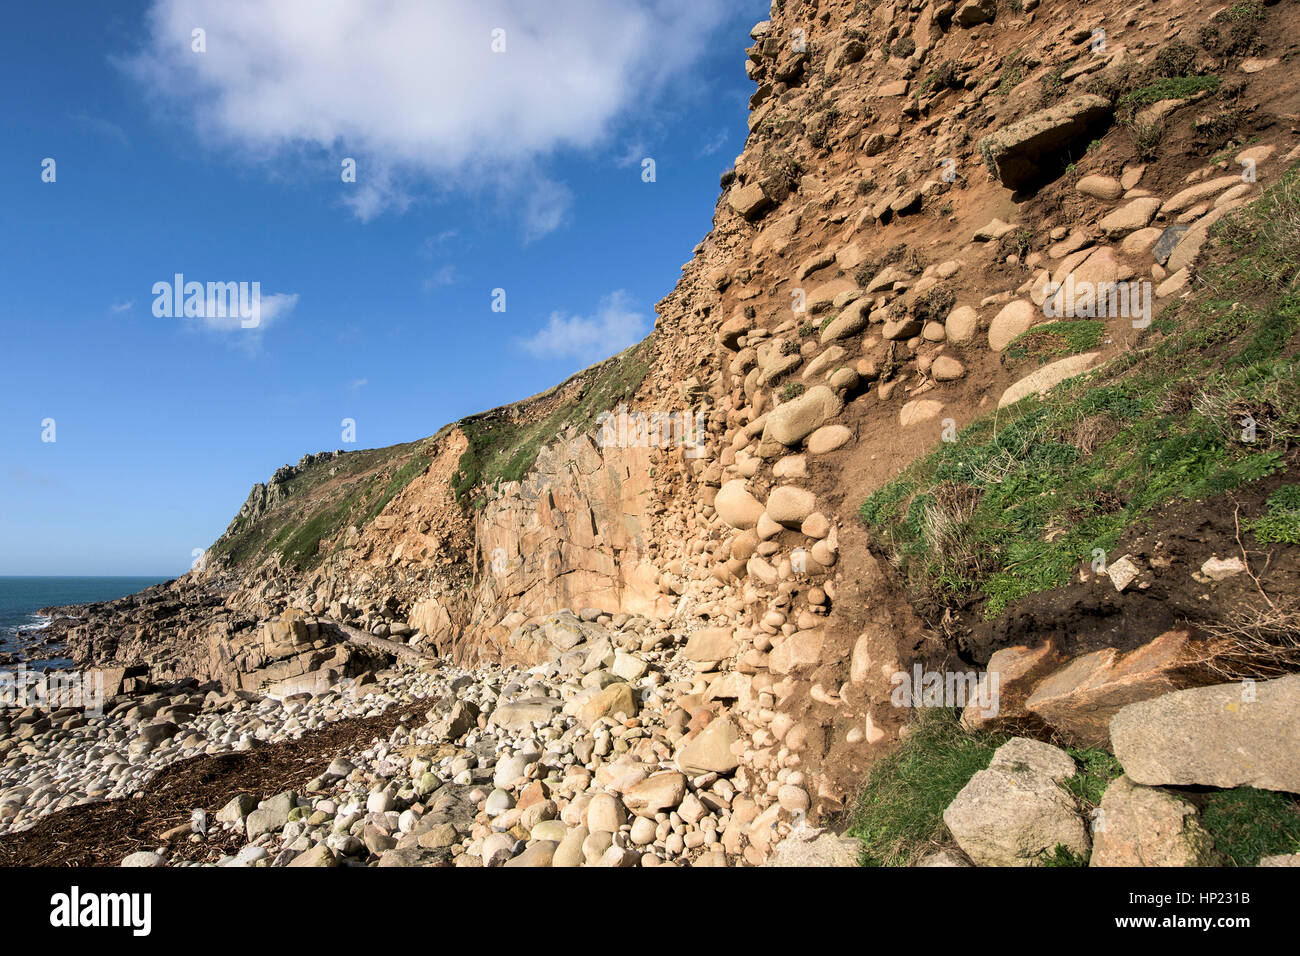 Geologie Geologische angehoben Strand Porth nanven Cornwall England uk Sssi. Stockfoto